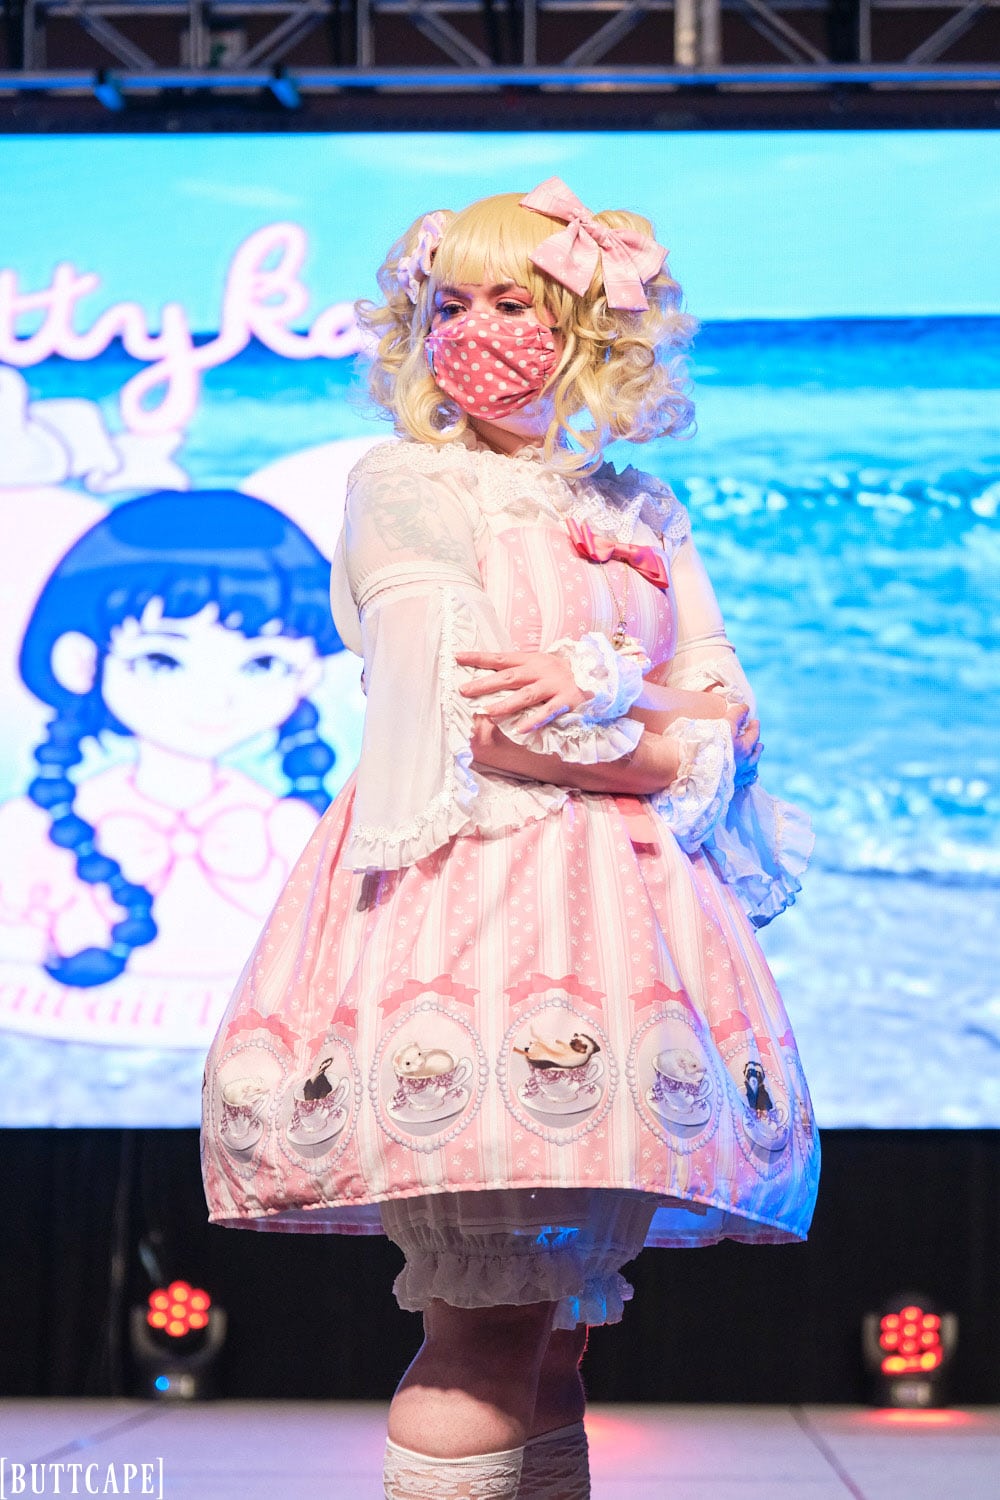 Kittykaya model 4 wearing pink lolita dress with tea cup theme and polka dot fabric - closeup 1.